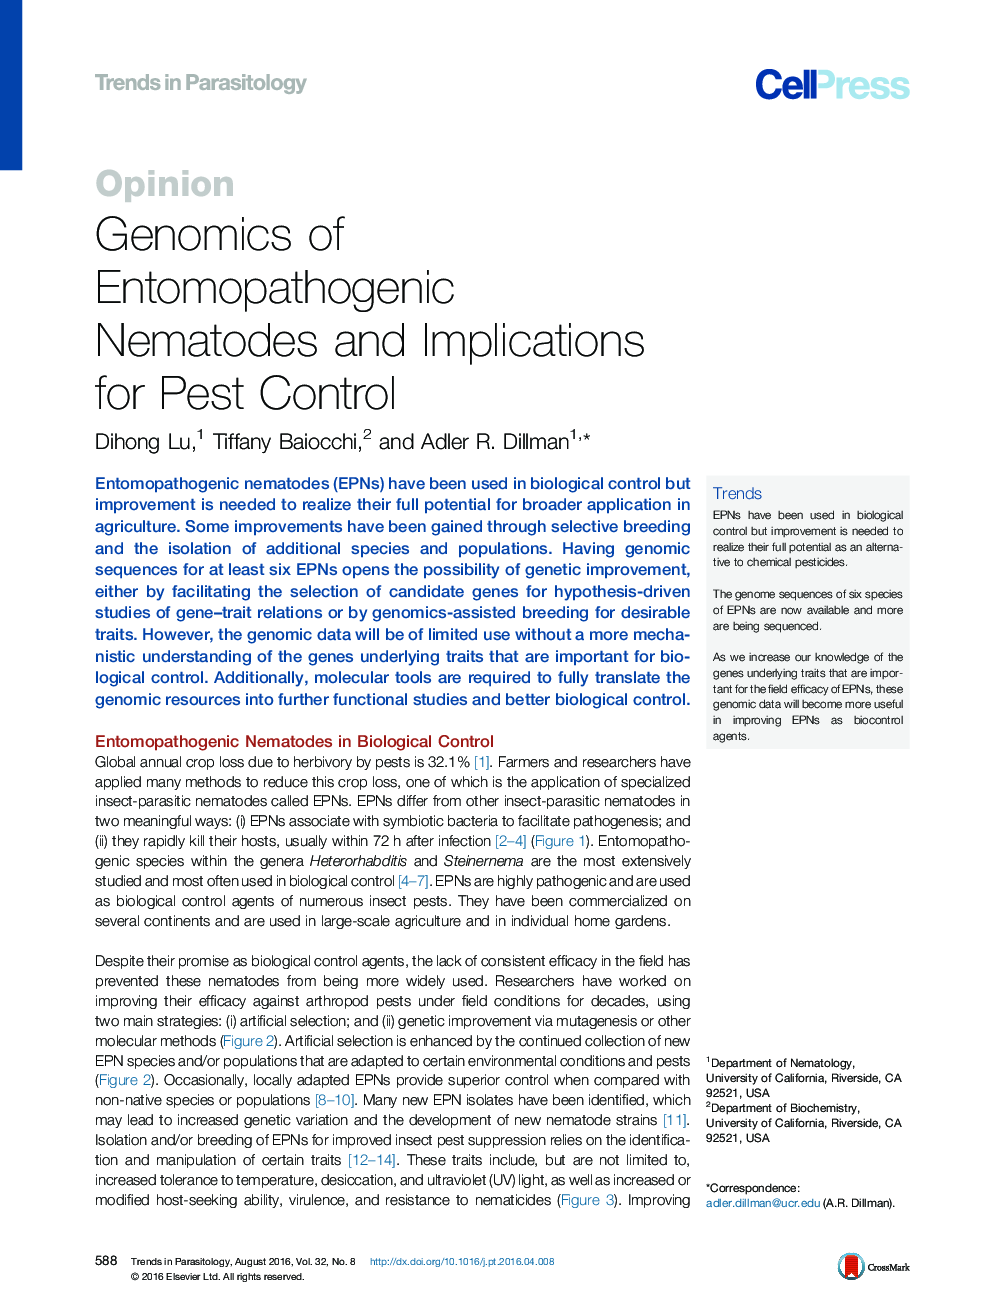 Genomics of Entomopathogenic Nematodes and Implications for Pest Control